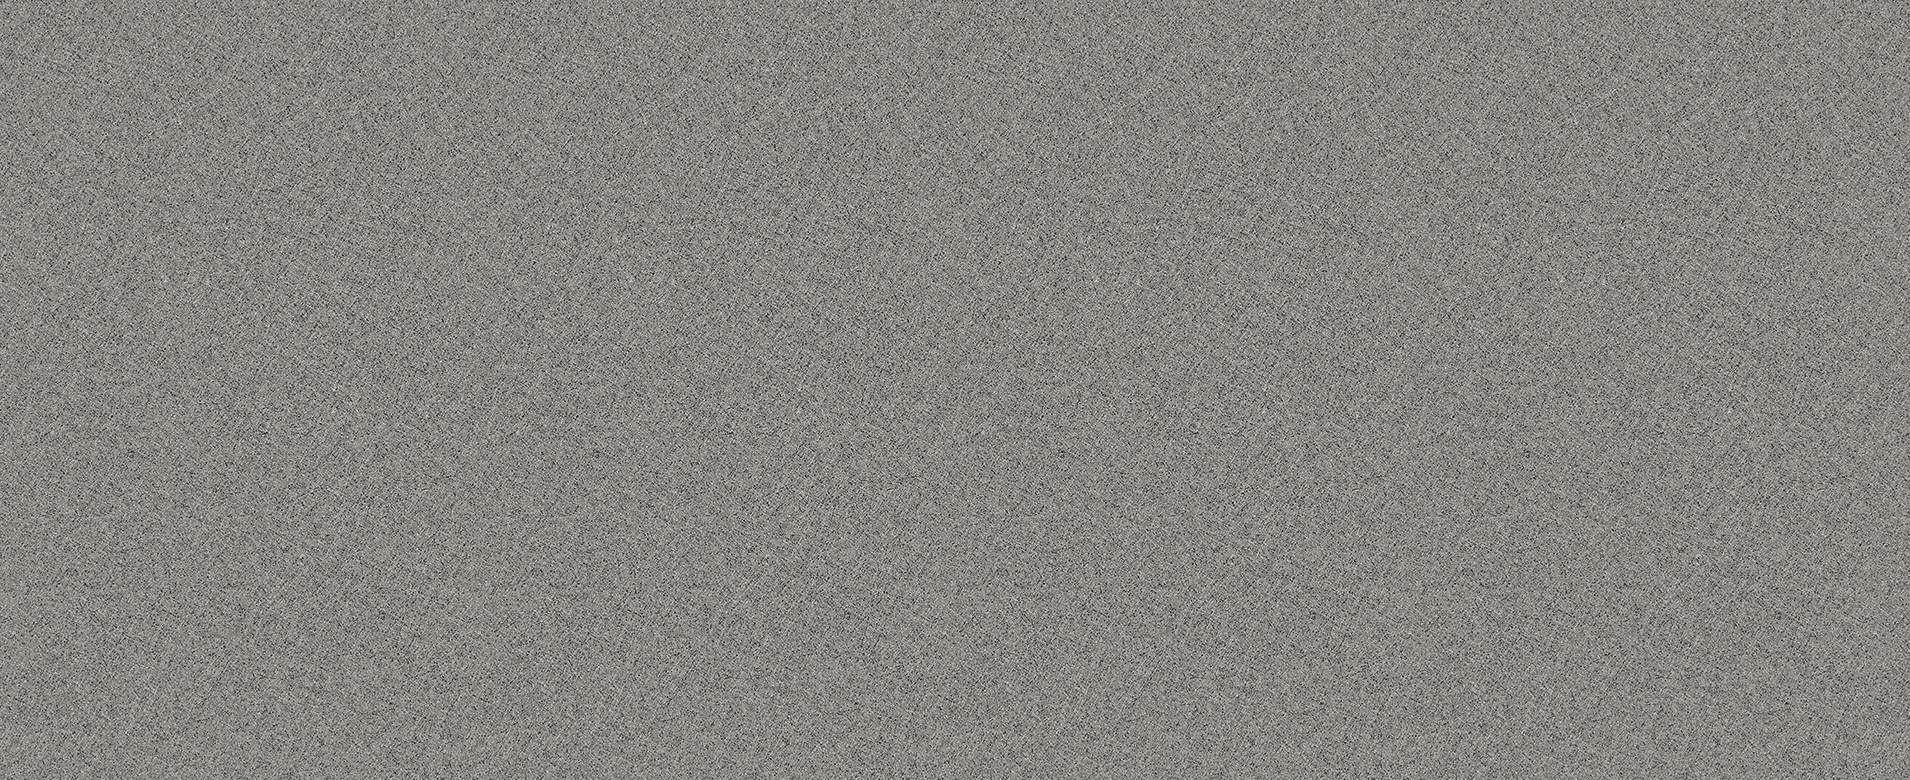 PM-22137 サンゲツ ビニル床シート ストロング クロスファイバー サンゲツ 床シート